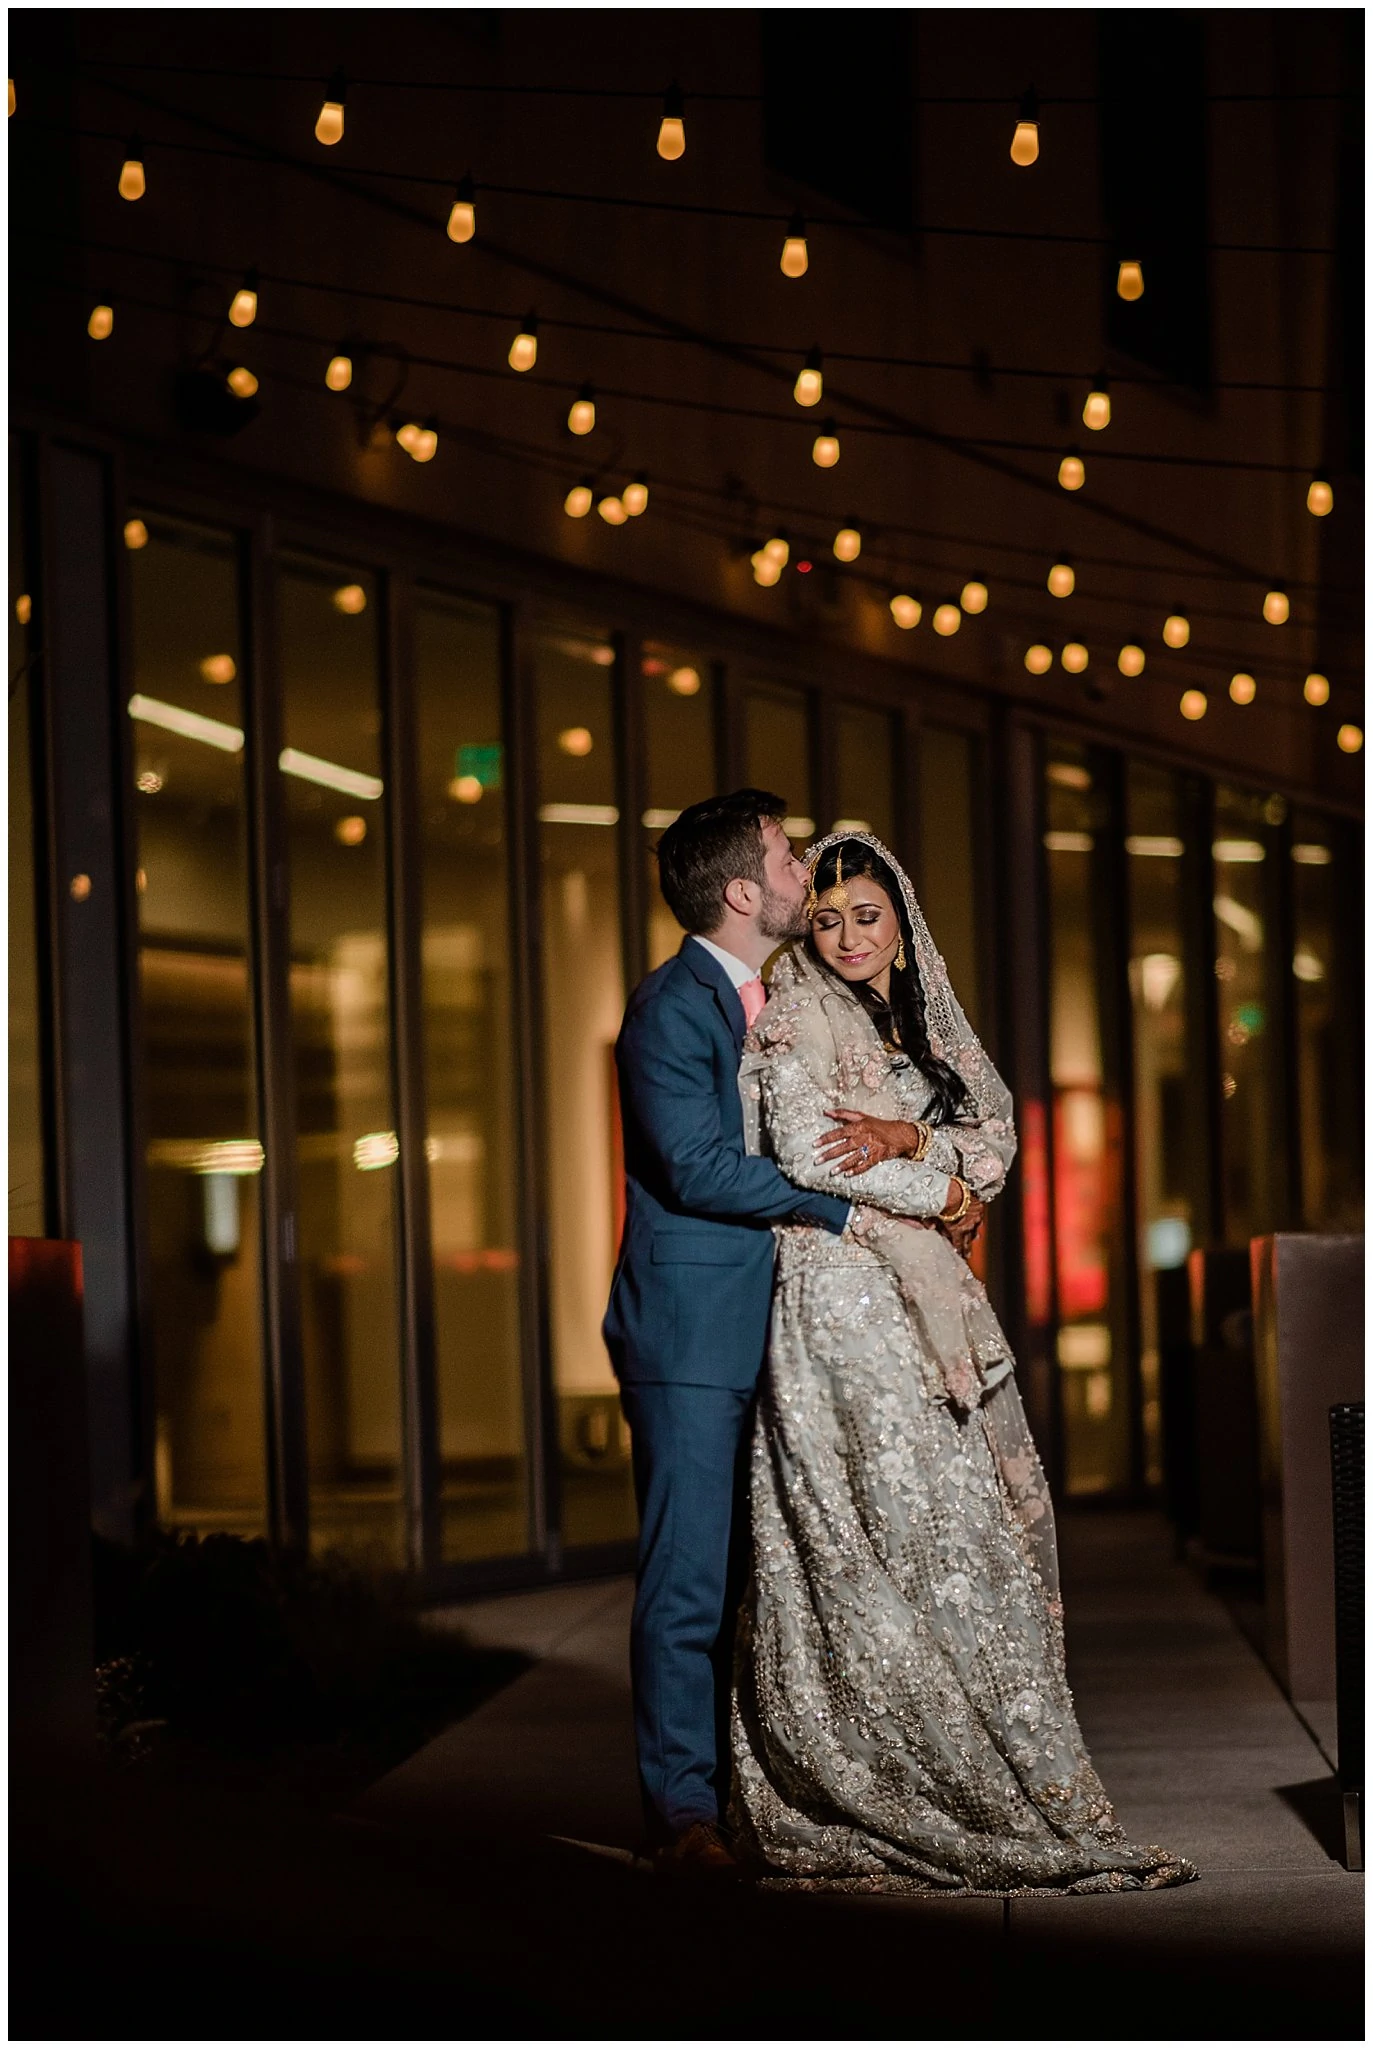 The Art Hotel Denver Nikah wedding photo